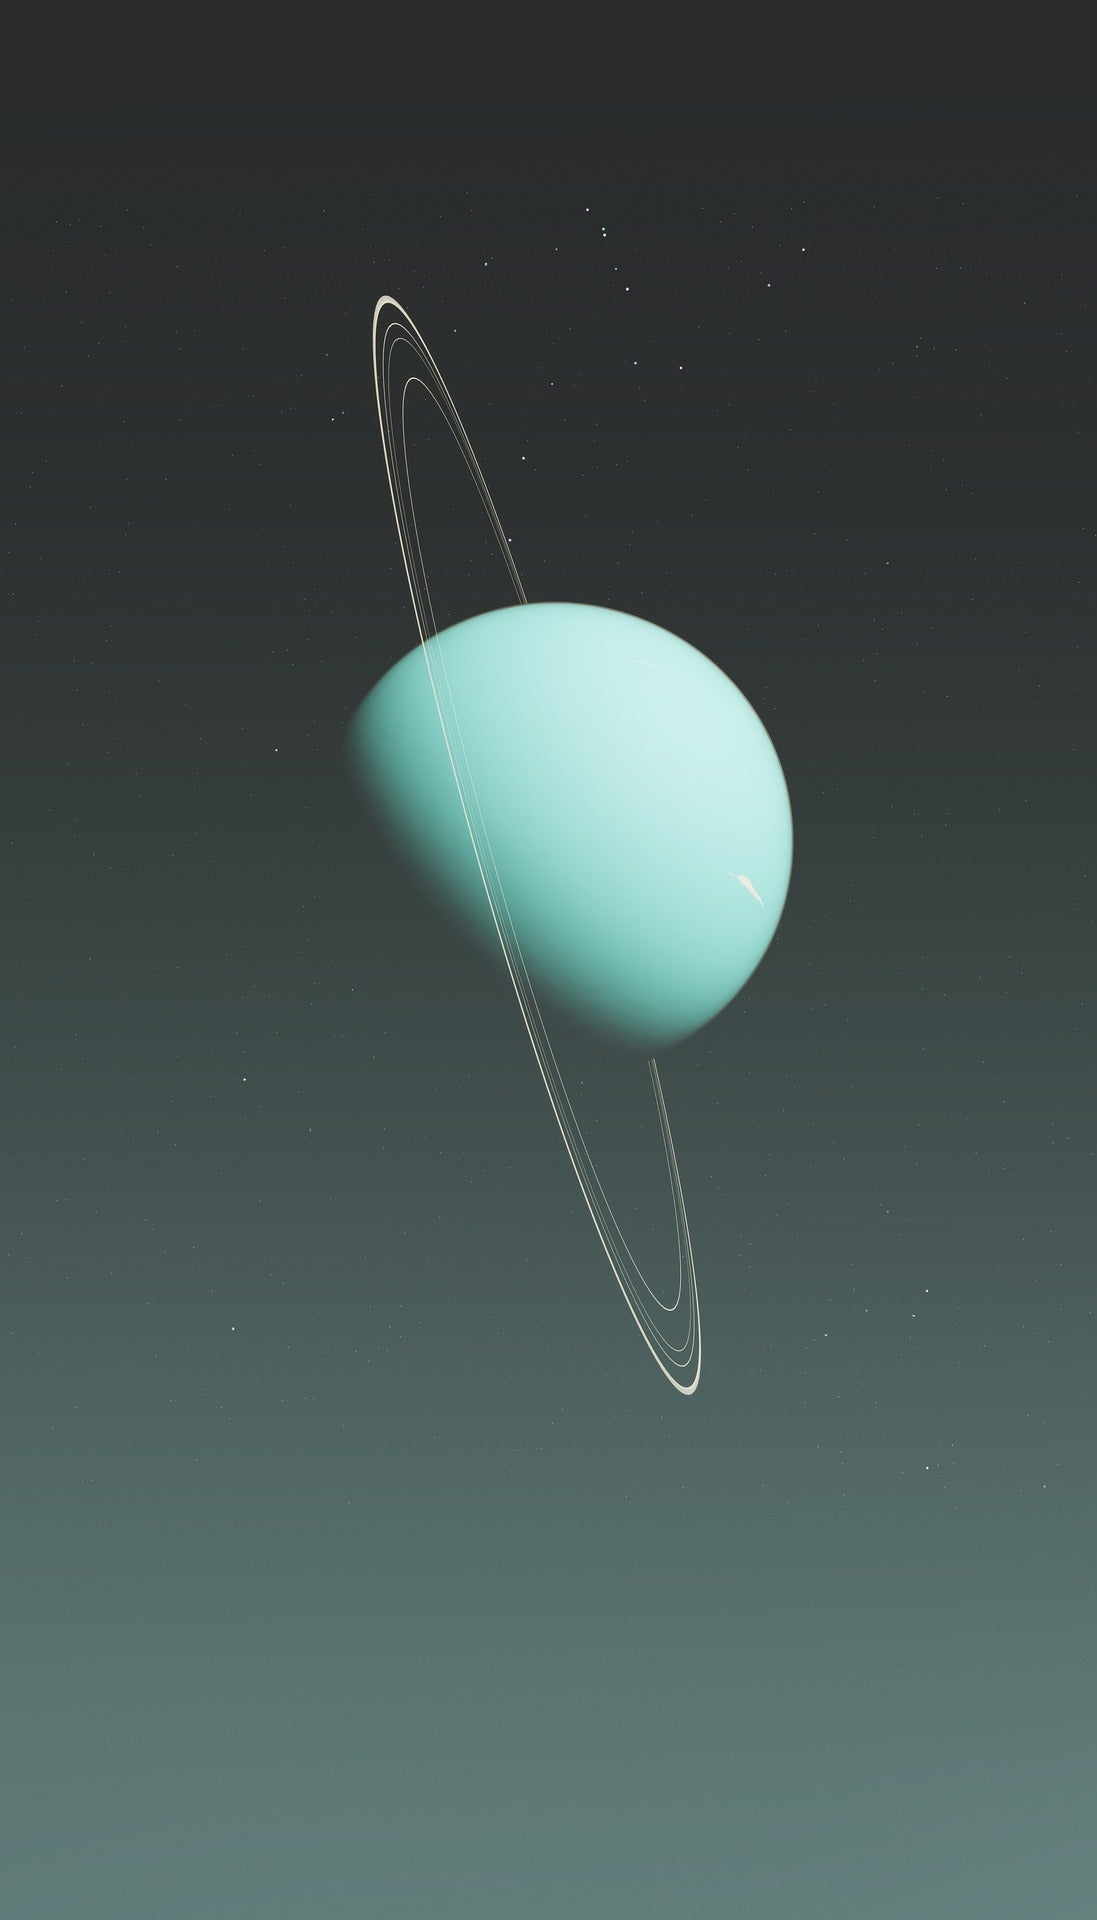 Uranus Conjunct The North Node Meaning